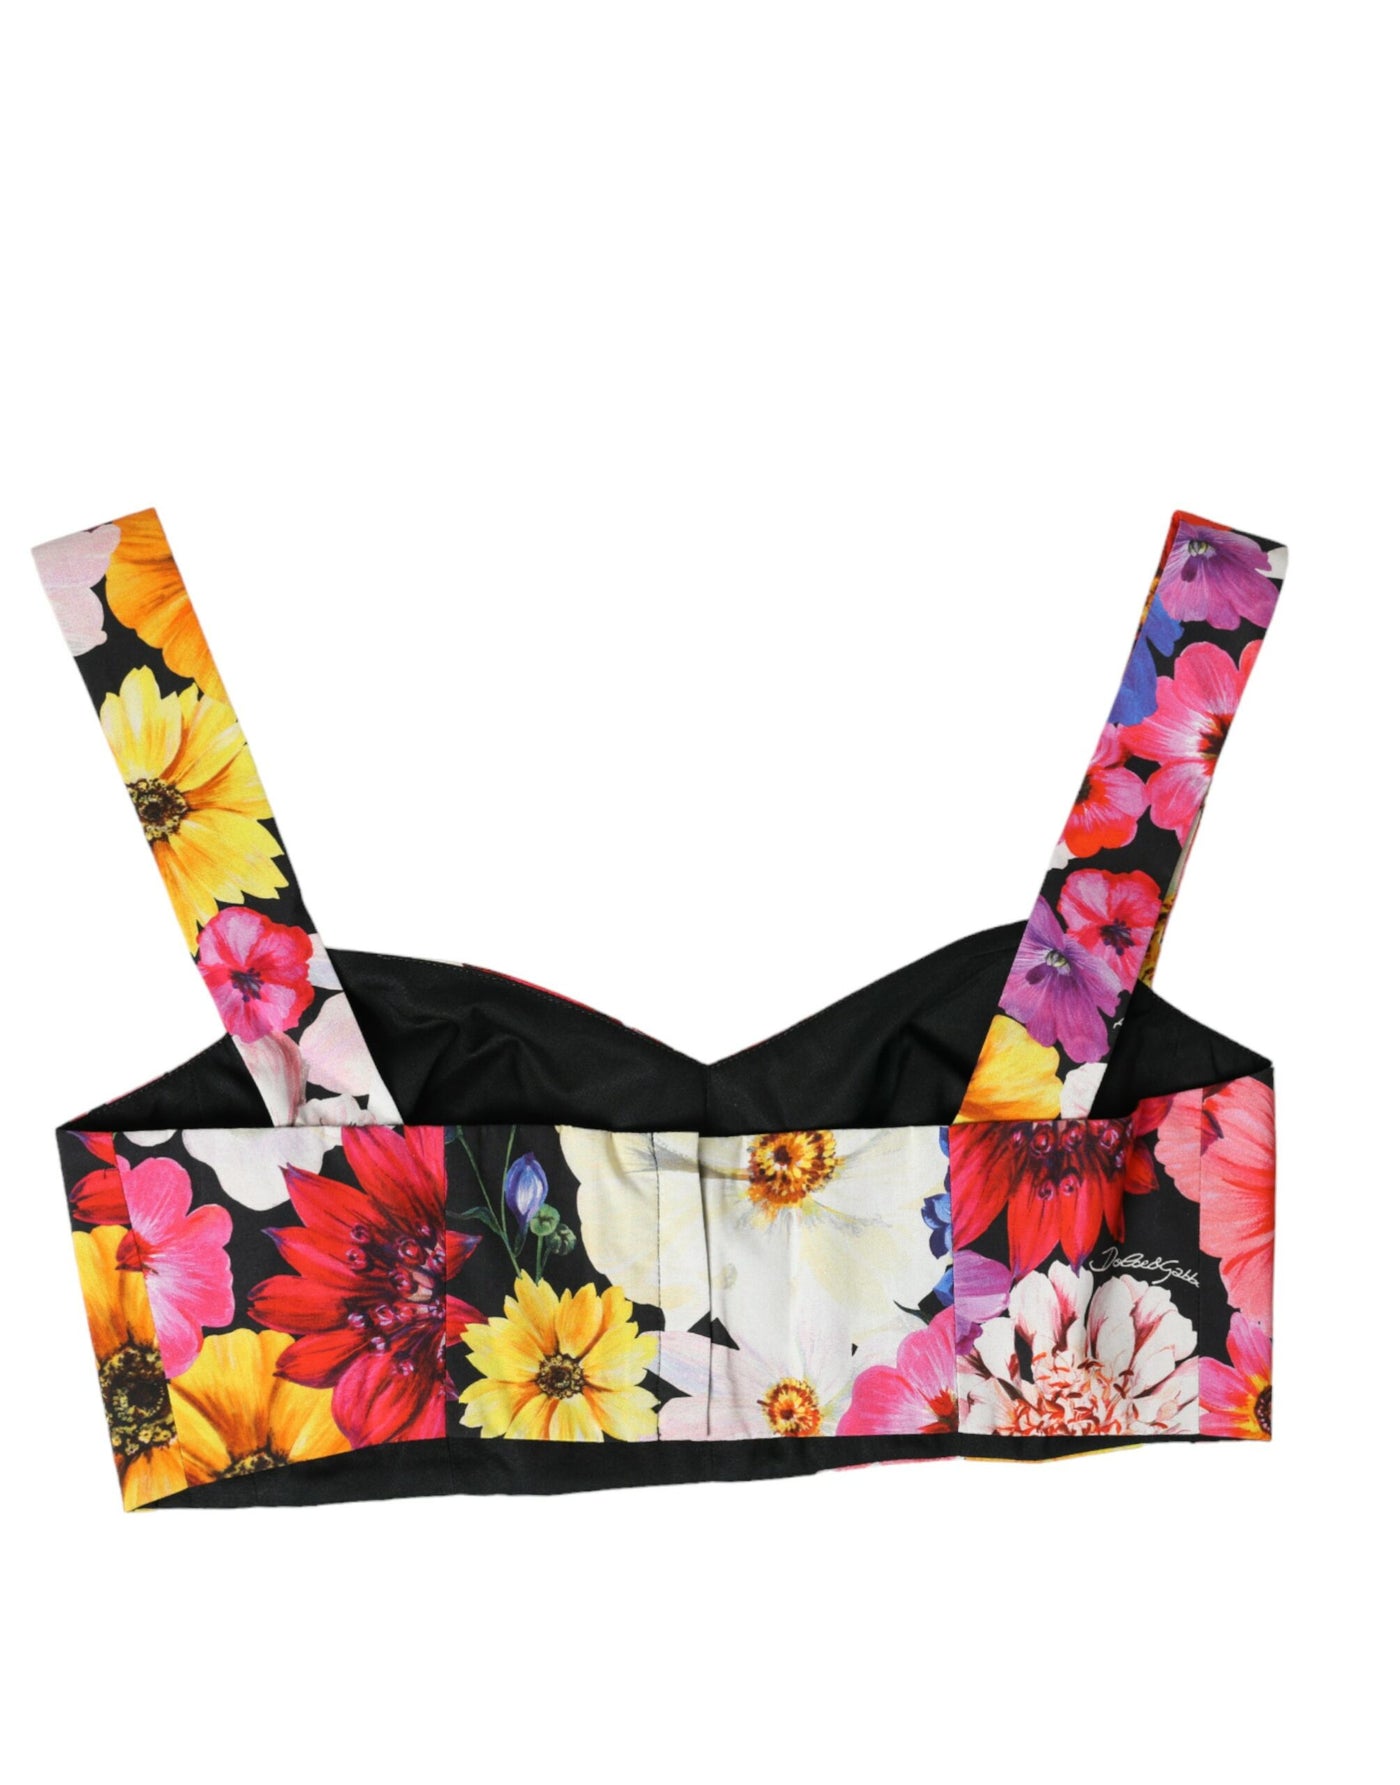 Dolce & Gabbana Exquisite Floral Bustier Crop Top